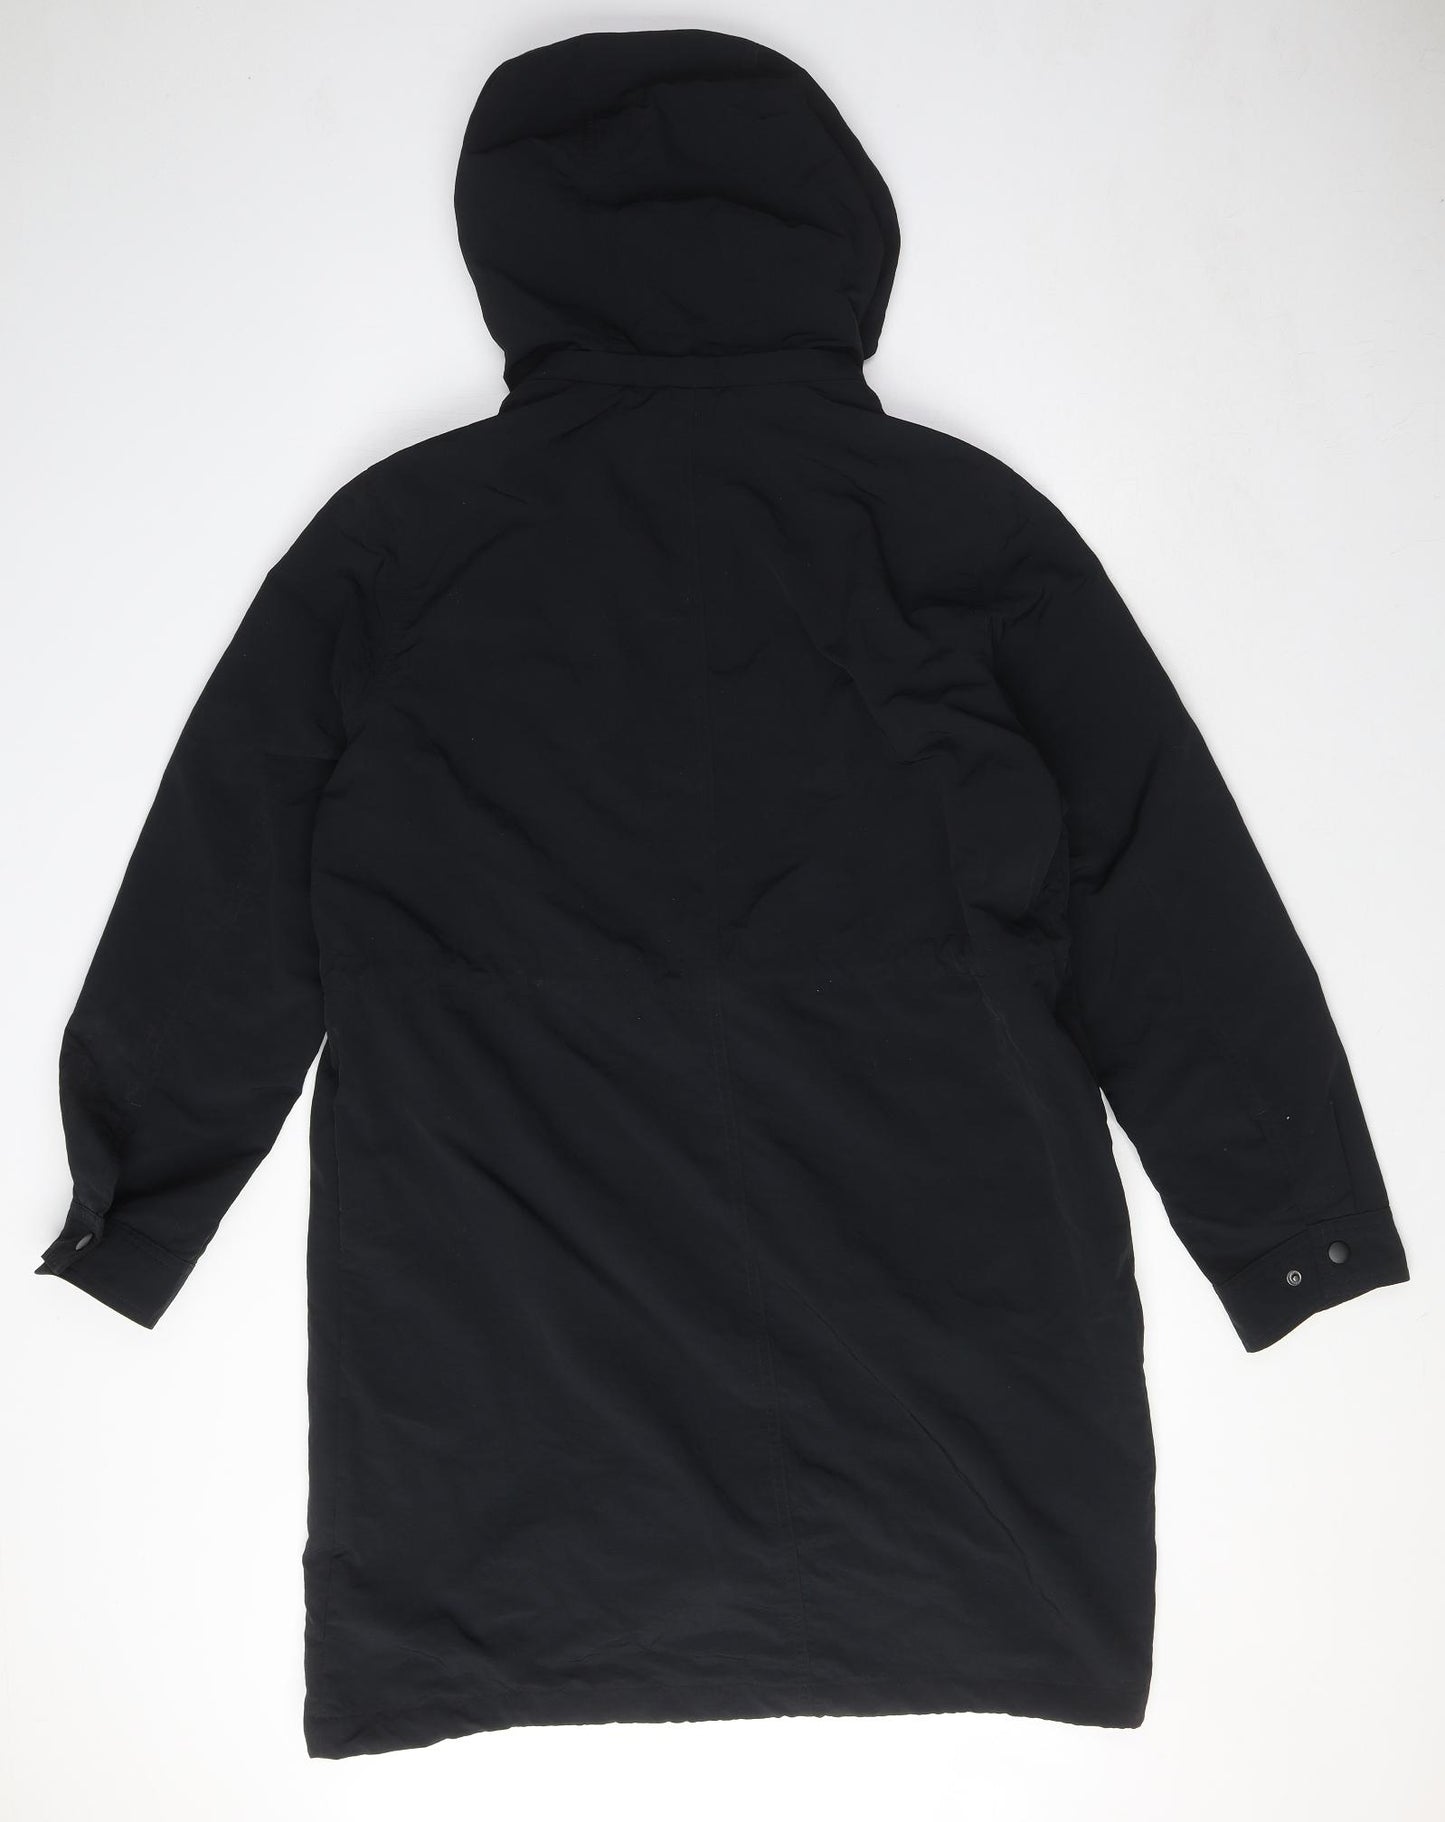 Marks and Spencer Womens Black Rain Coat Coat Size 14 Zip